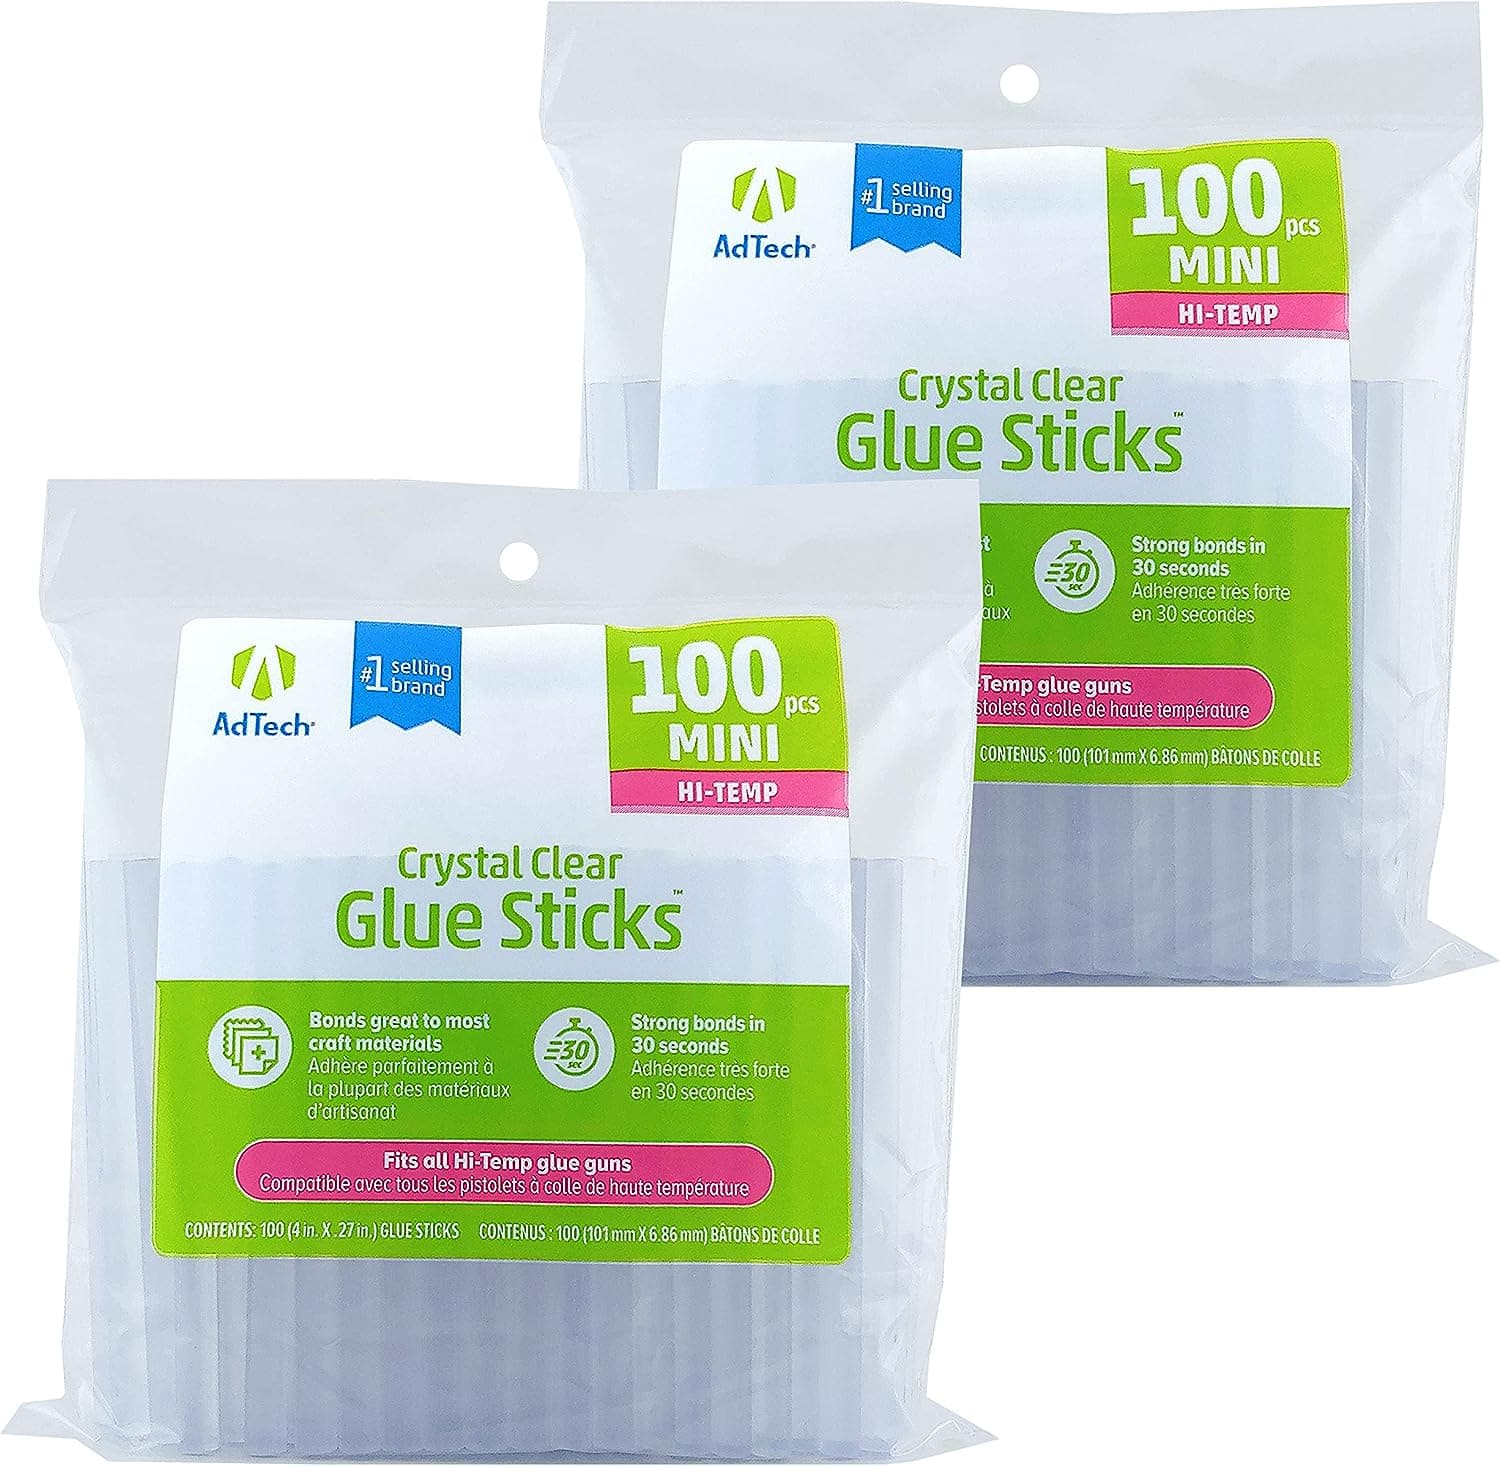 VILLCASE 200pcs Art Craft Glue Sticks Hot Glue Sticks Crafting Project  Glitter Adhesive Color Melt Glue Sticks Small Glue Sticks Sparkle Glue  Sticks